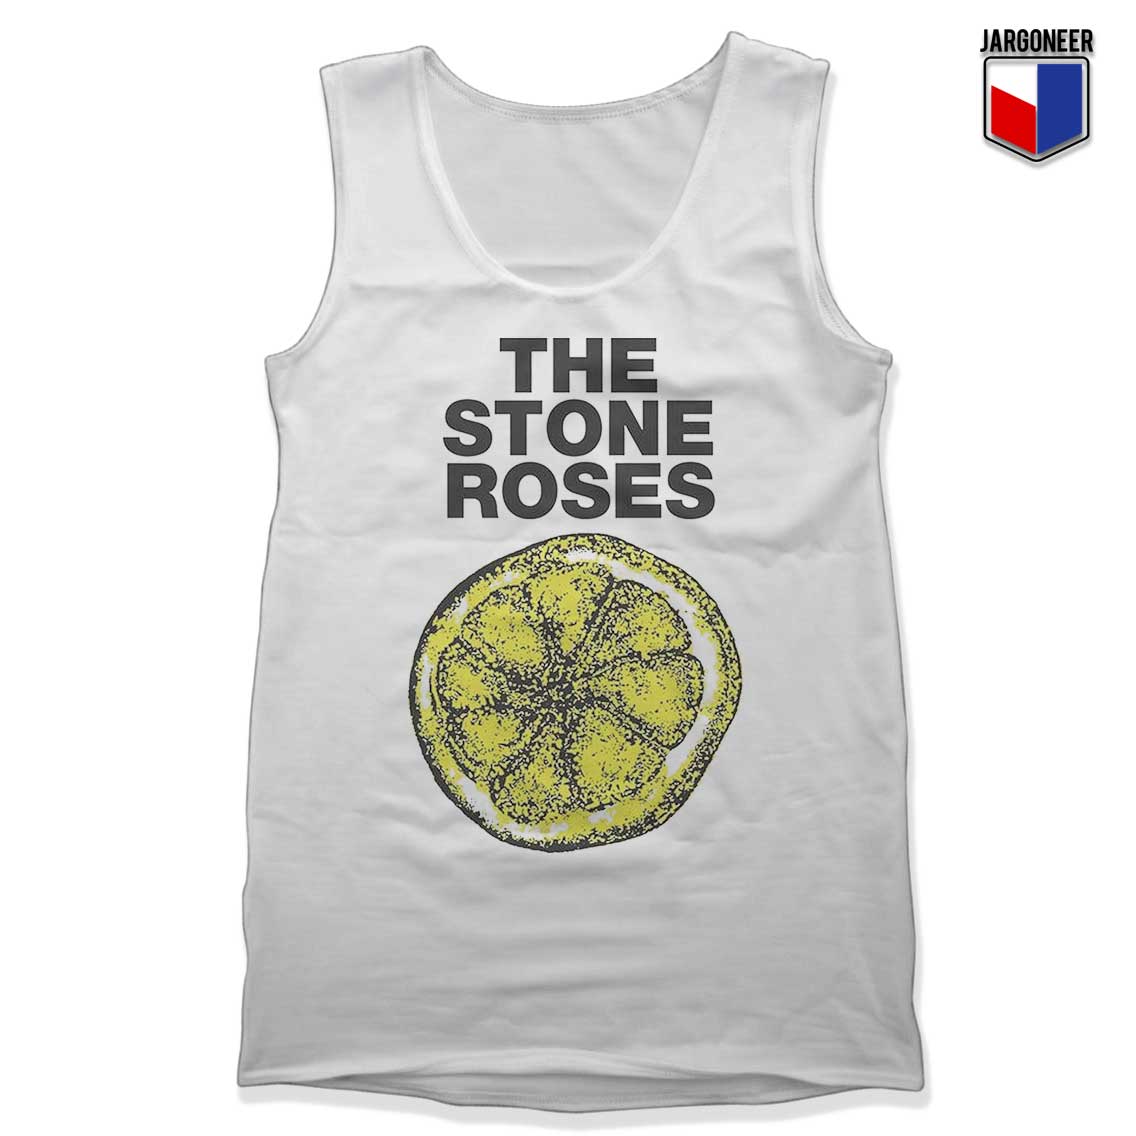 The Stone Roses Tank Top - Shop Unique Graphic Cool Shirt Designs